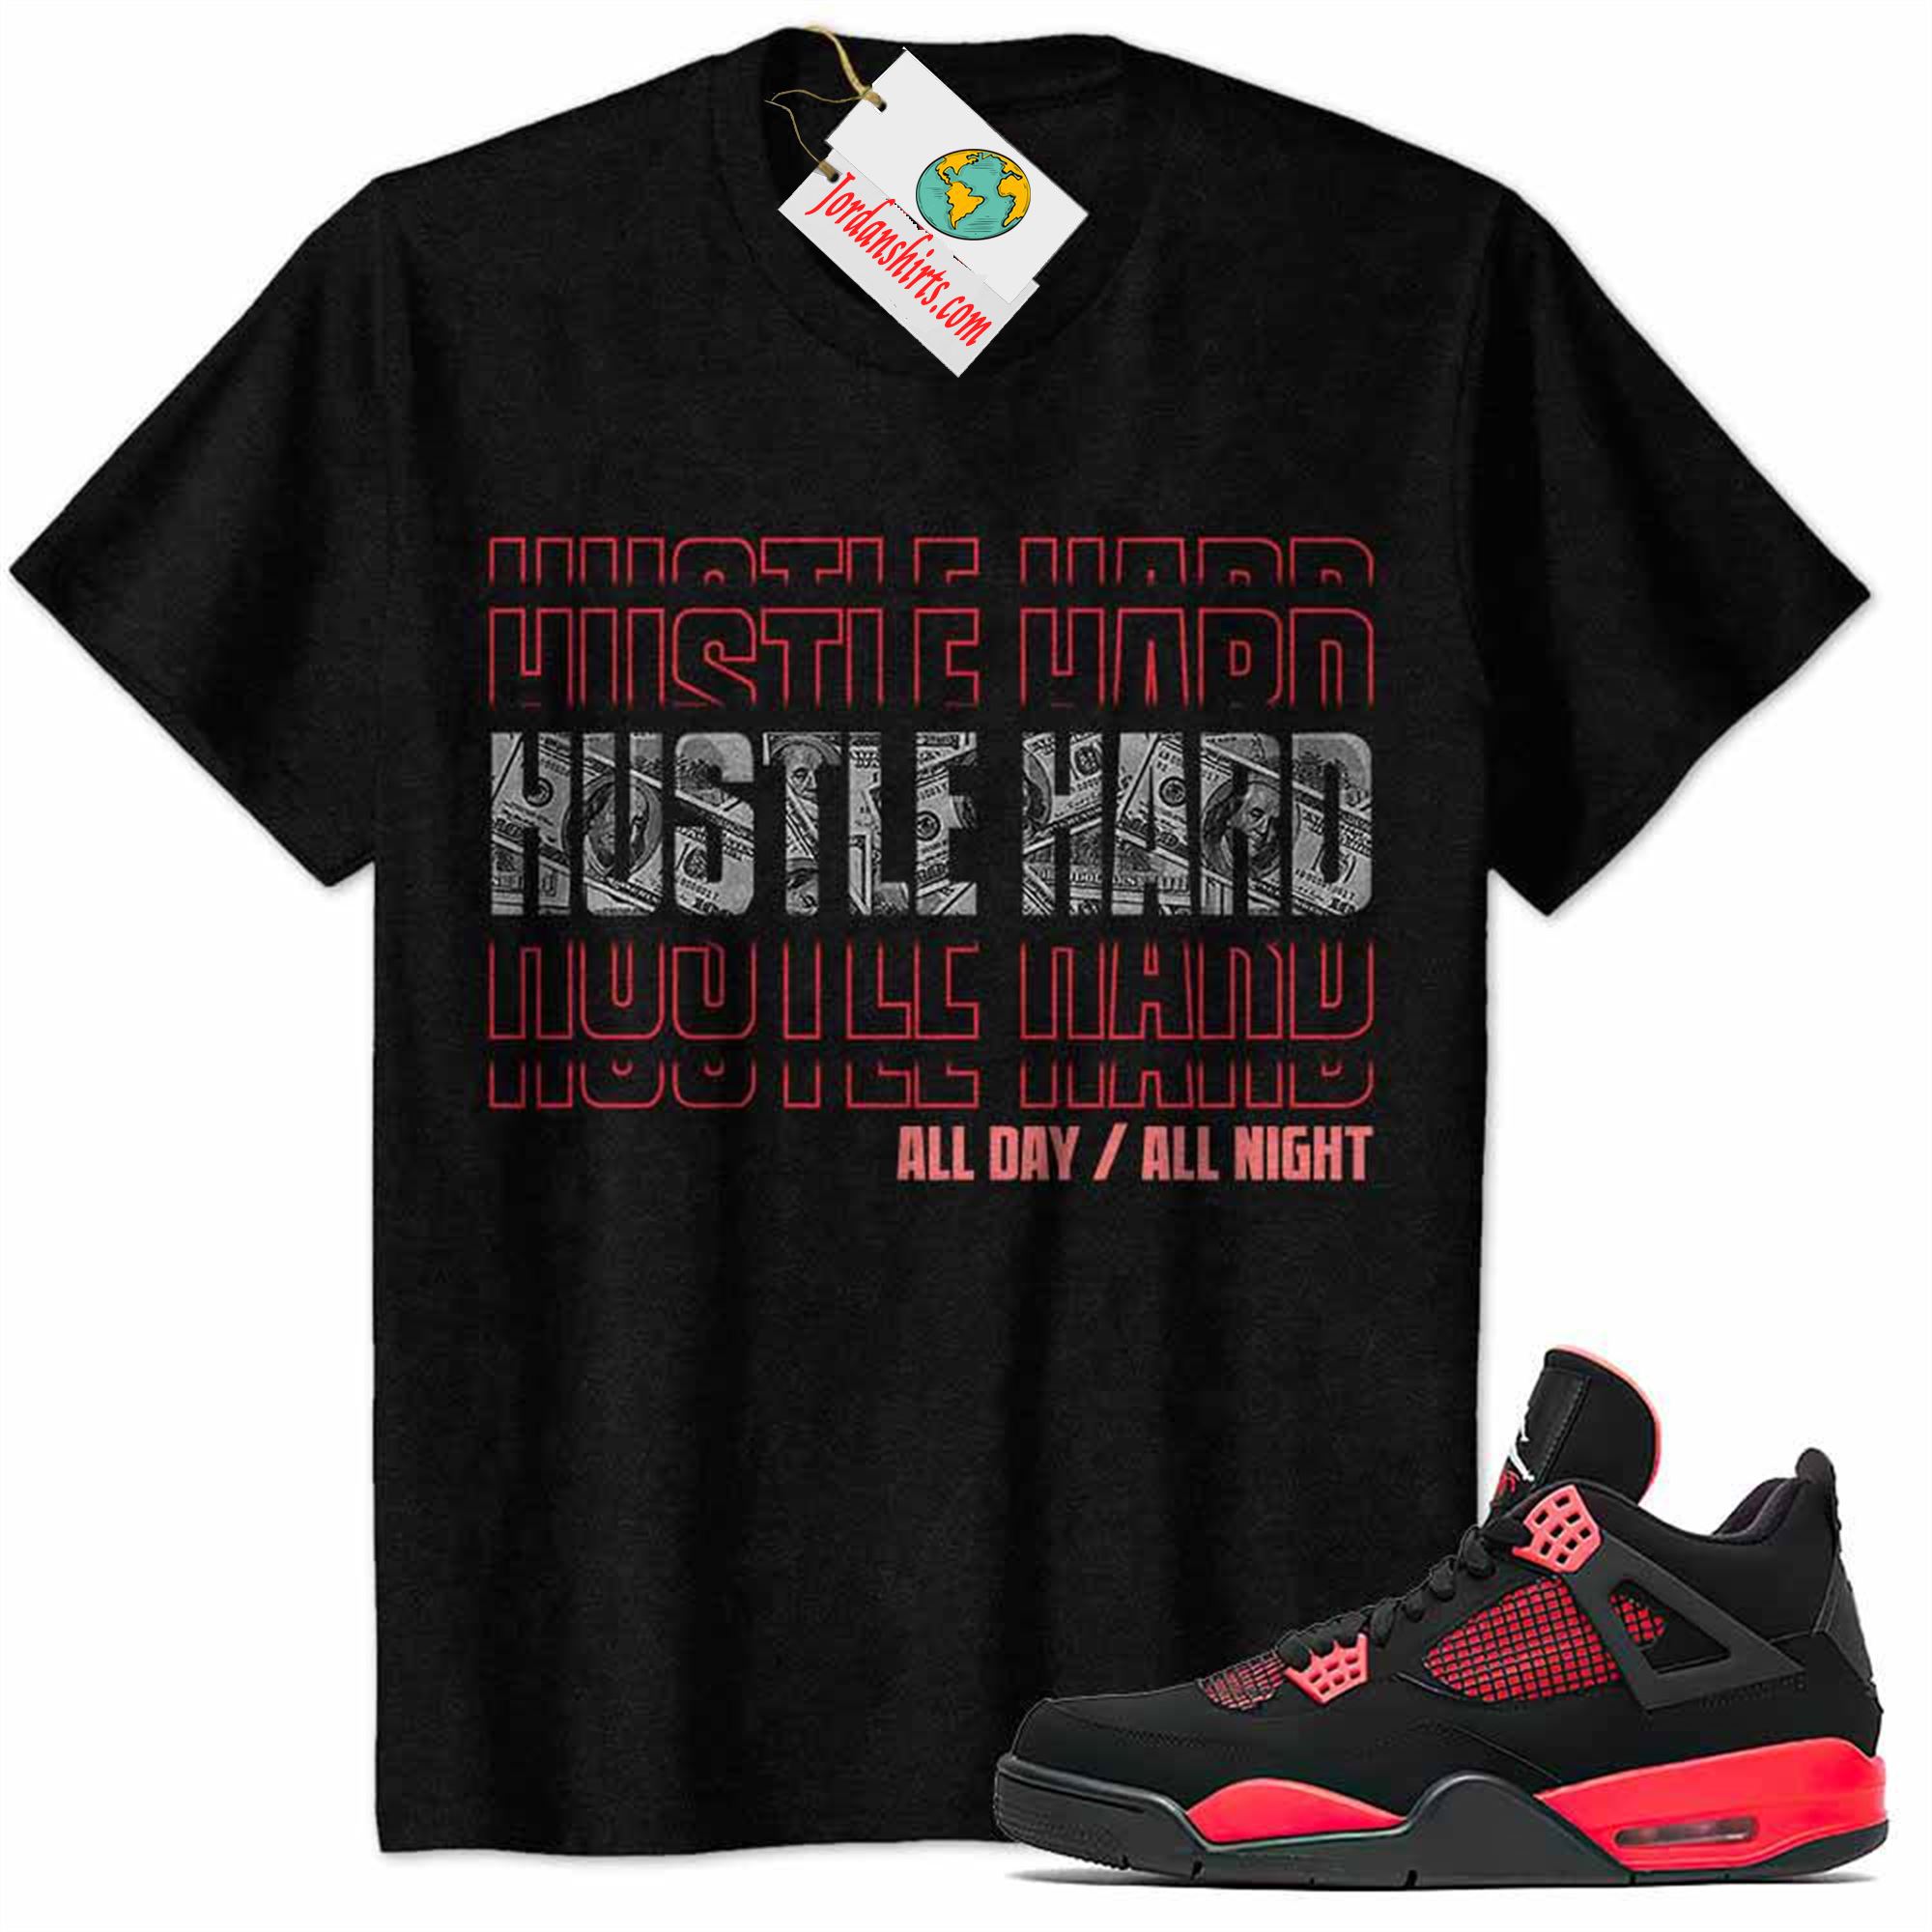 Jordan 4 Shirt, Hustle Hard All Day All Night Dollar Money Black Air Jordan 4 Red Thunder 4s Size Up To 5xl